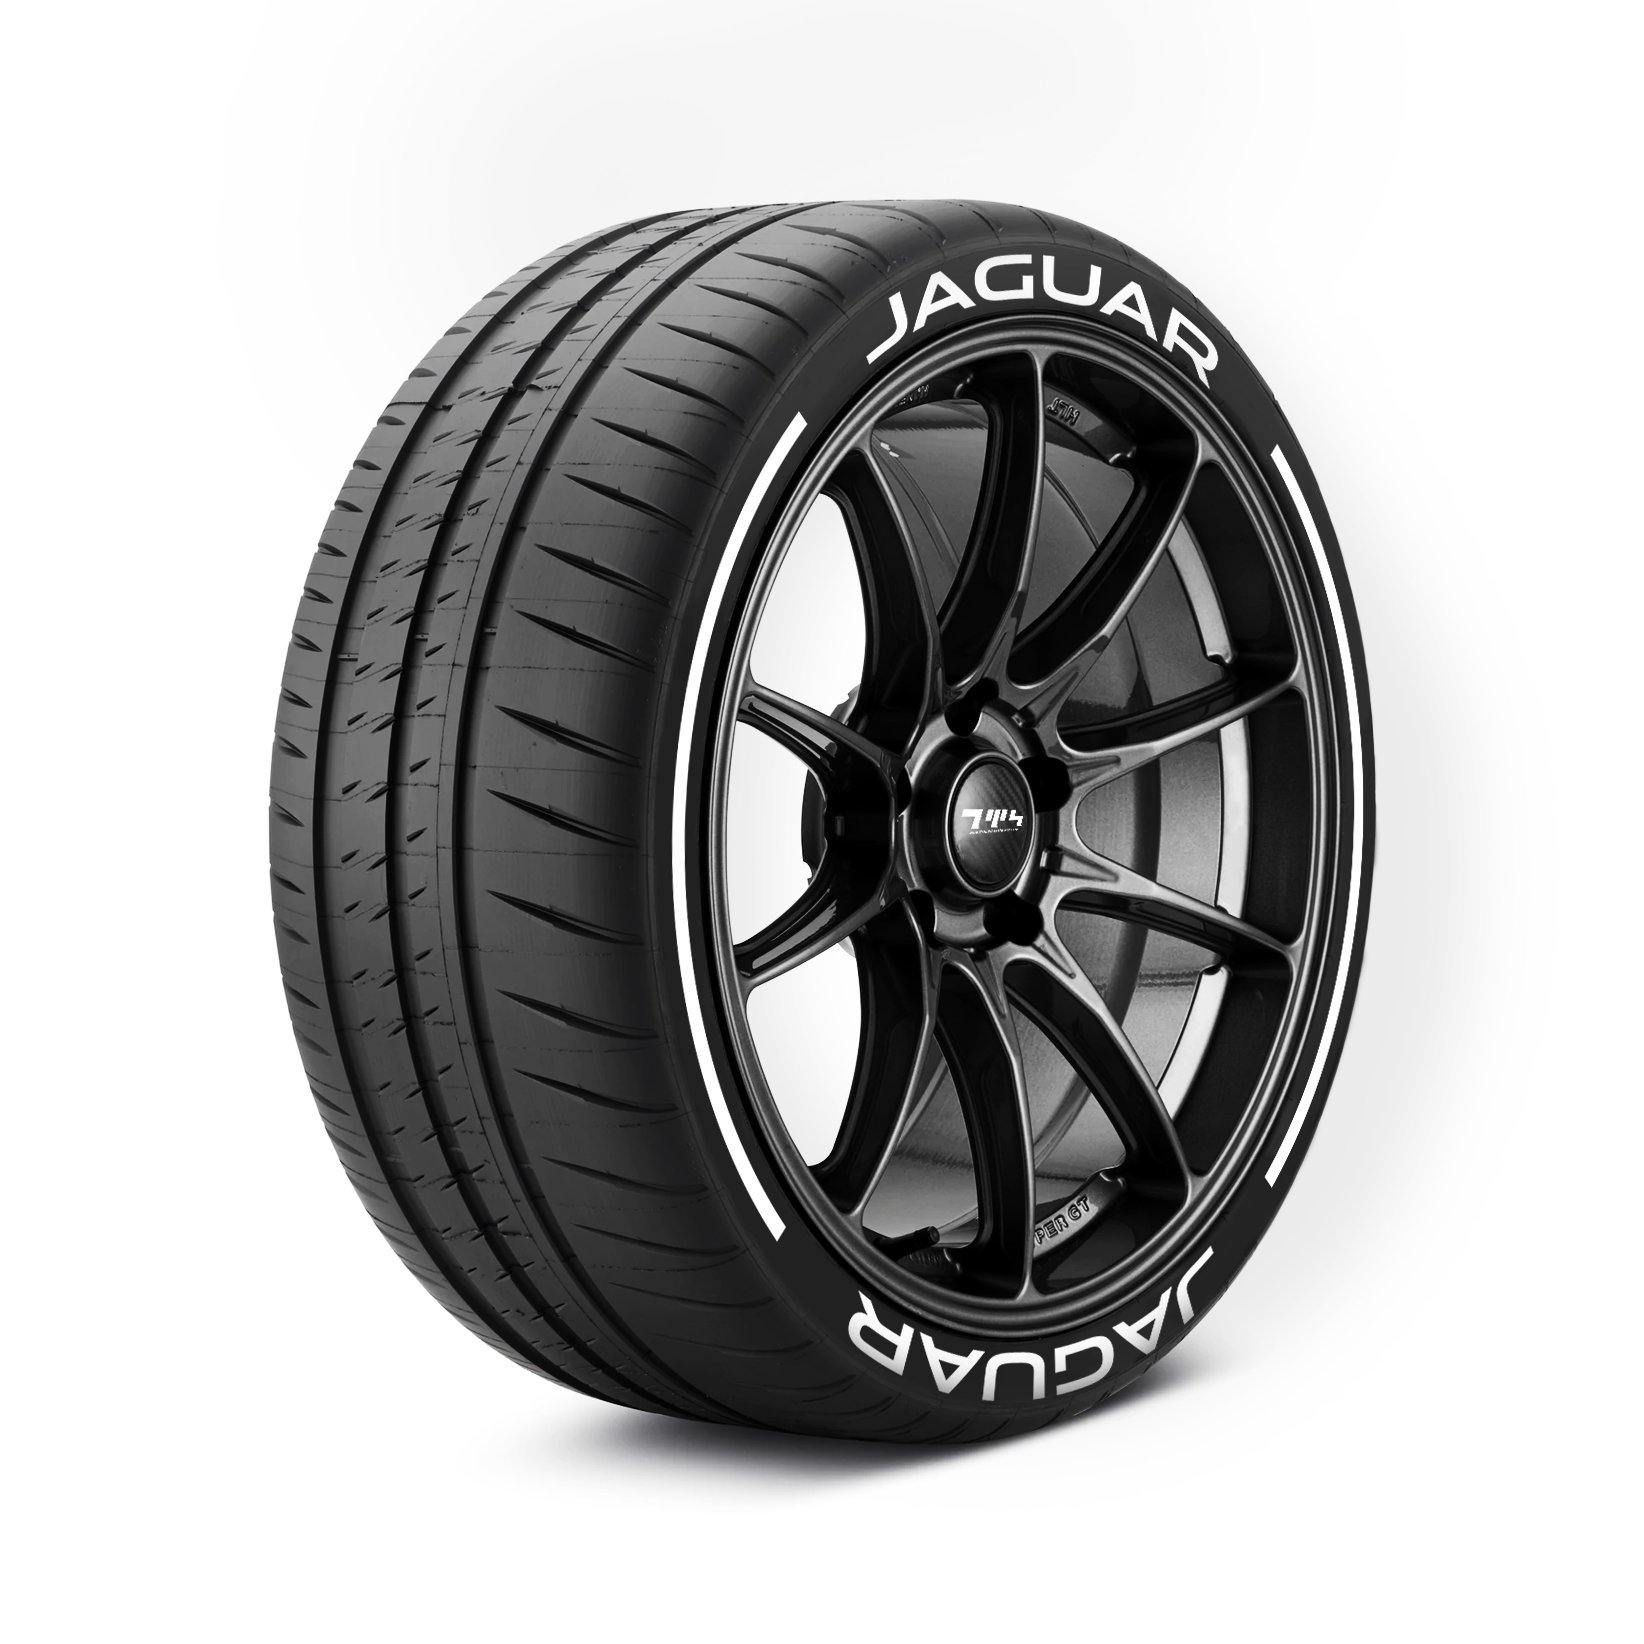 Jaguar Tyre Stickers - Tyre Wall Stickers